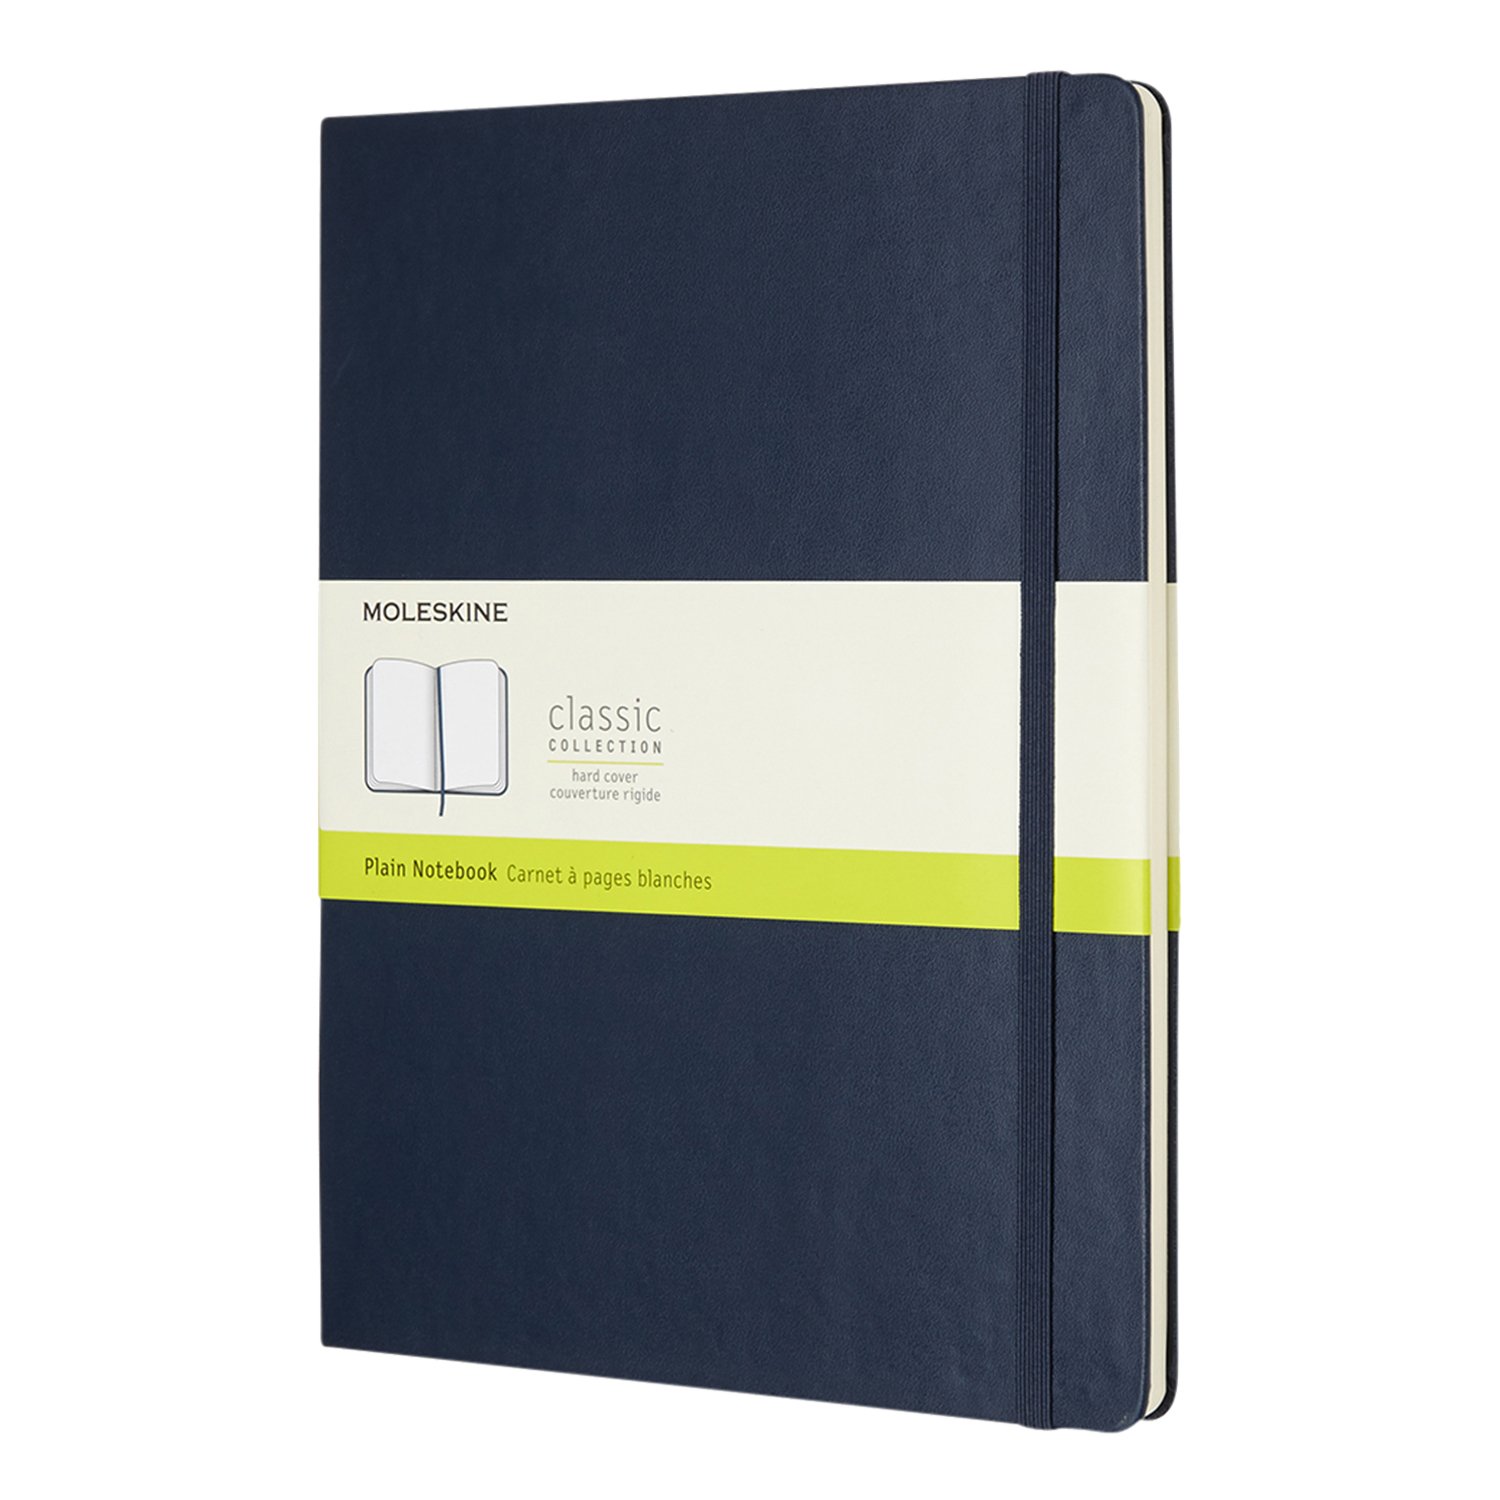 Moleskine hard cover notebook, plain | PrintSimple